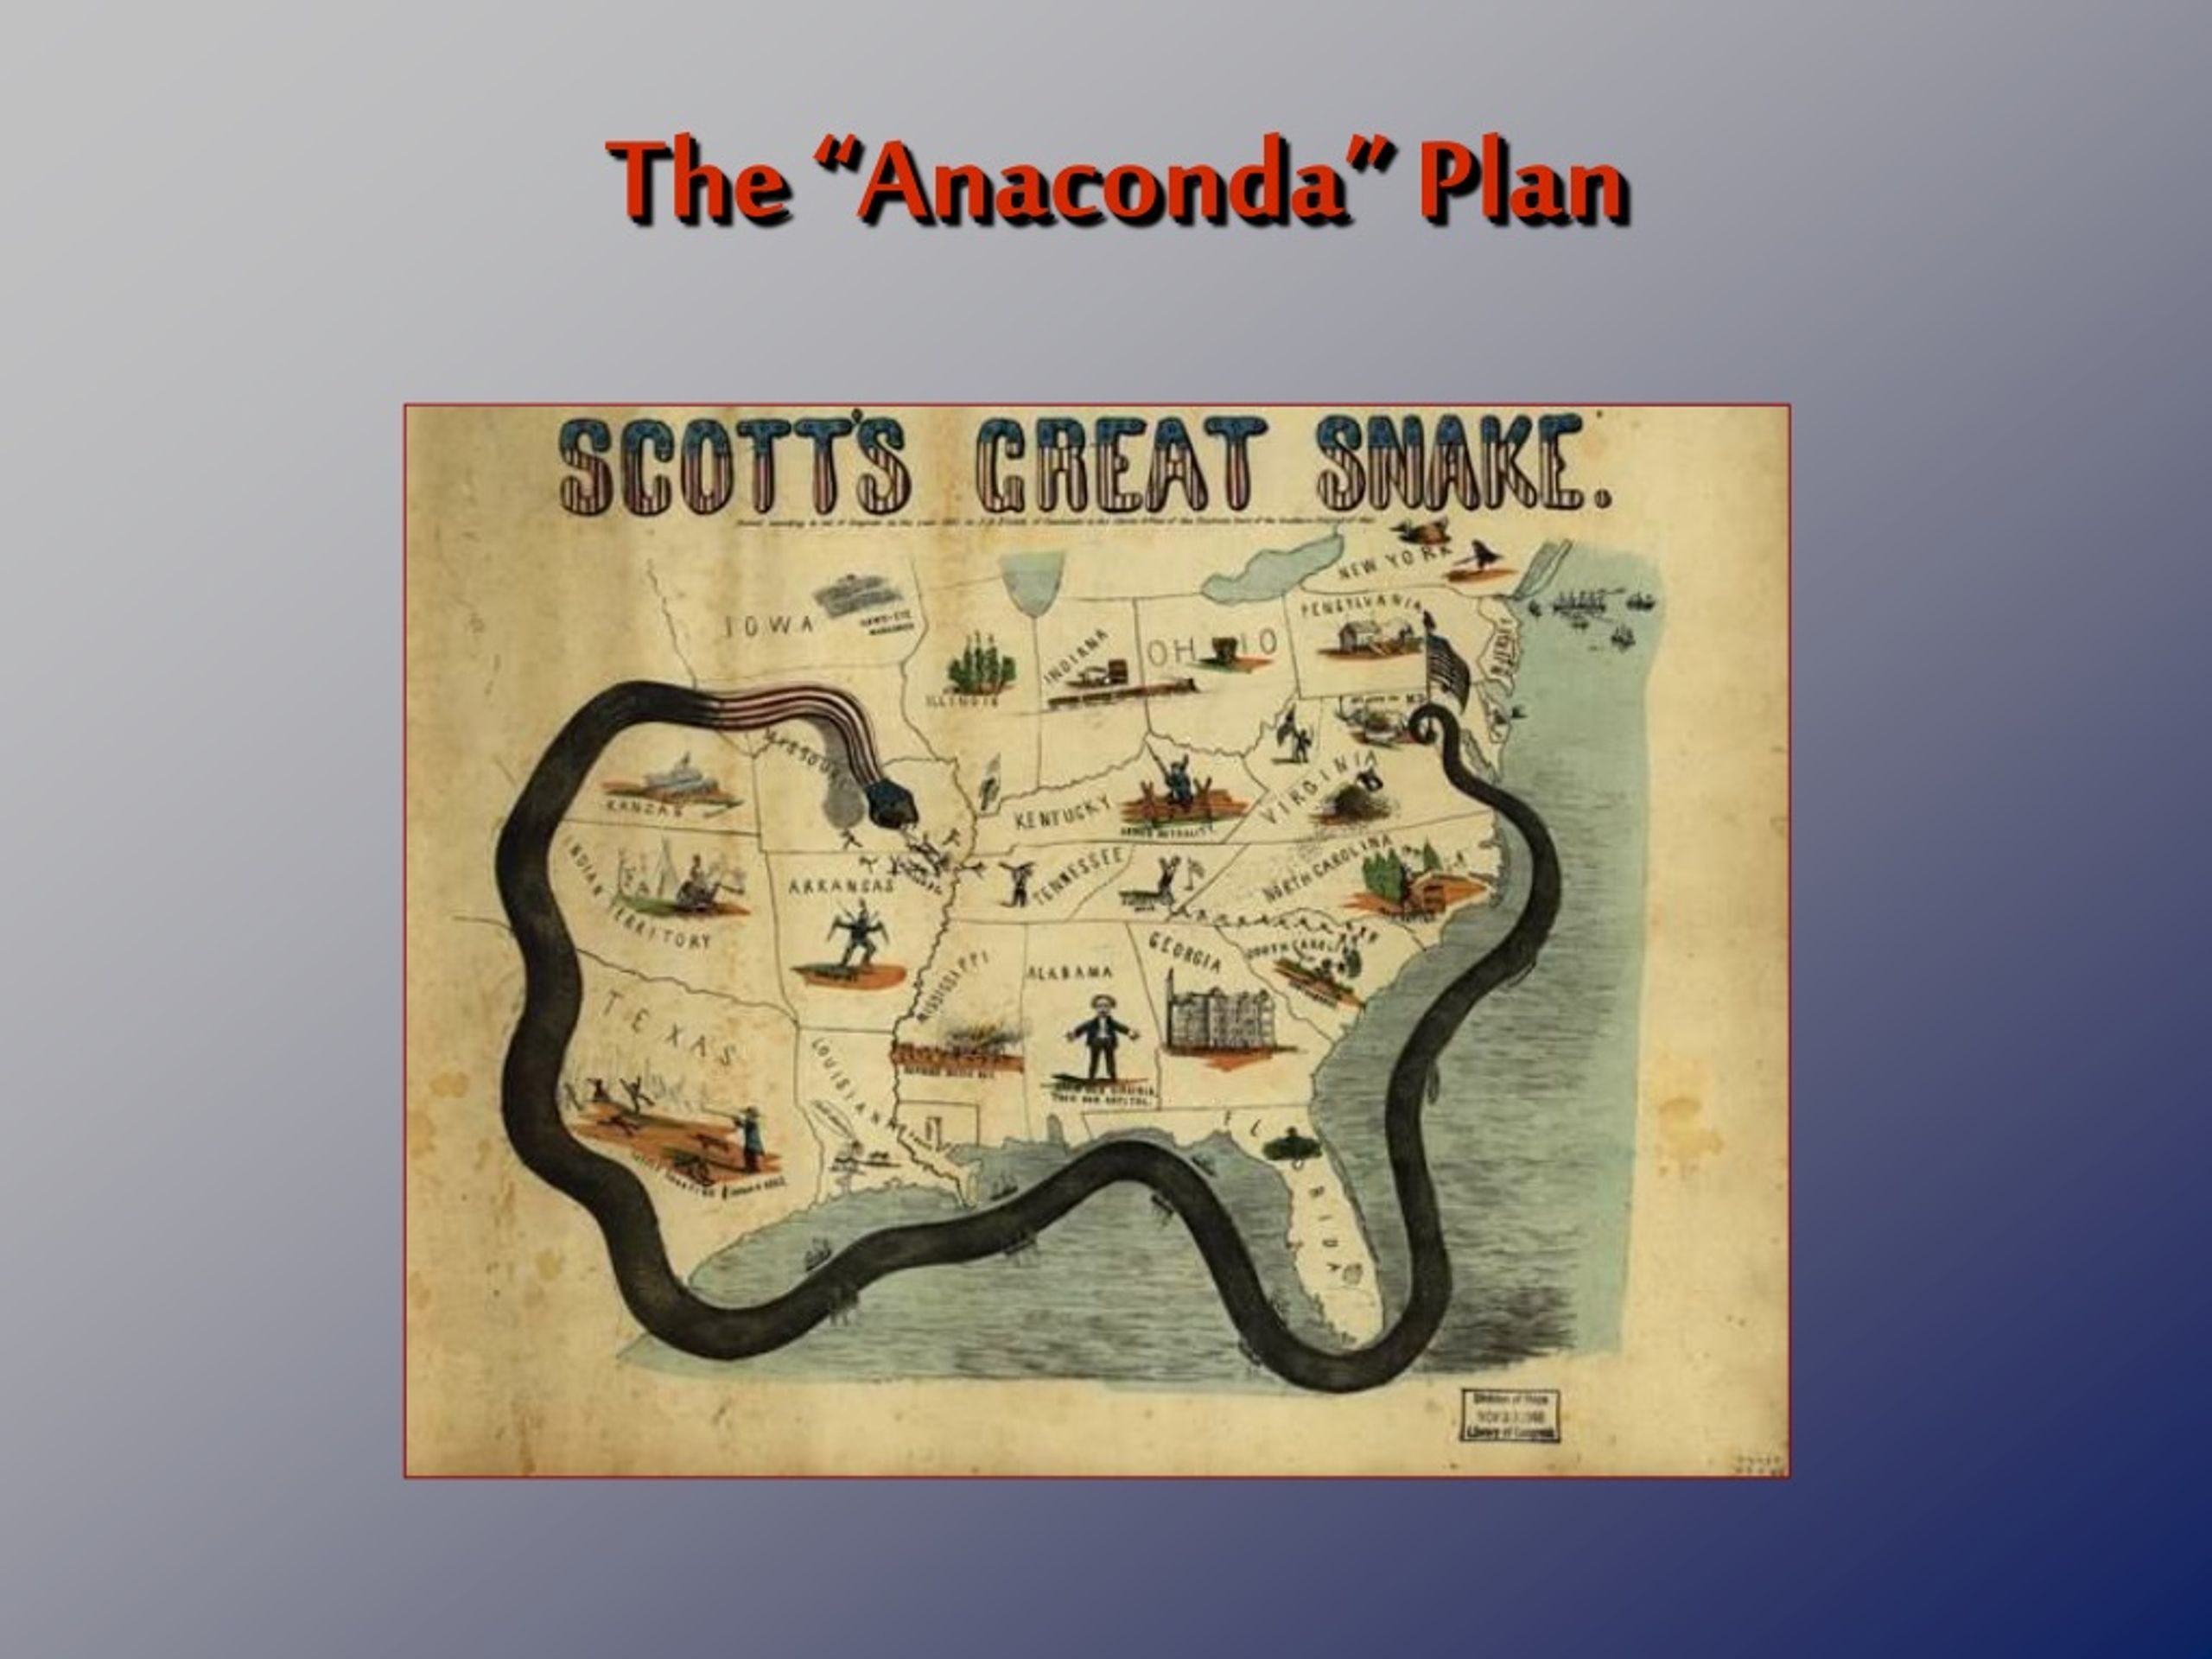 anaconda plan definition us history